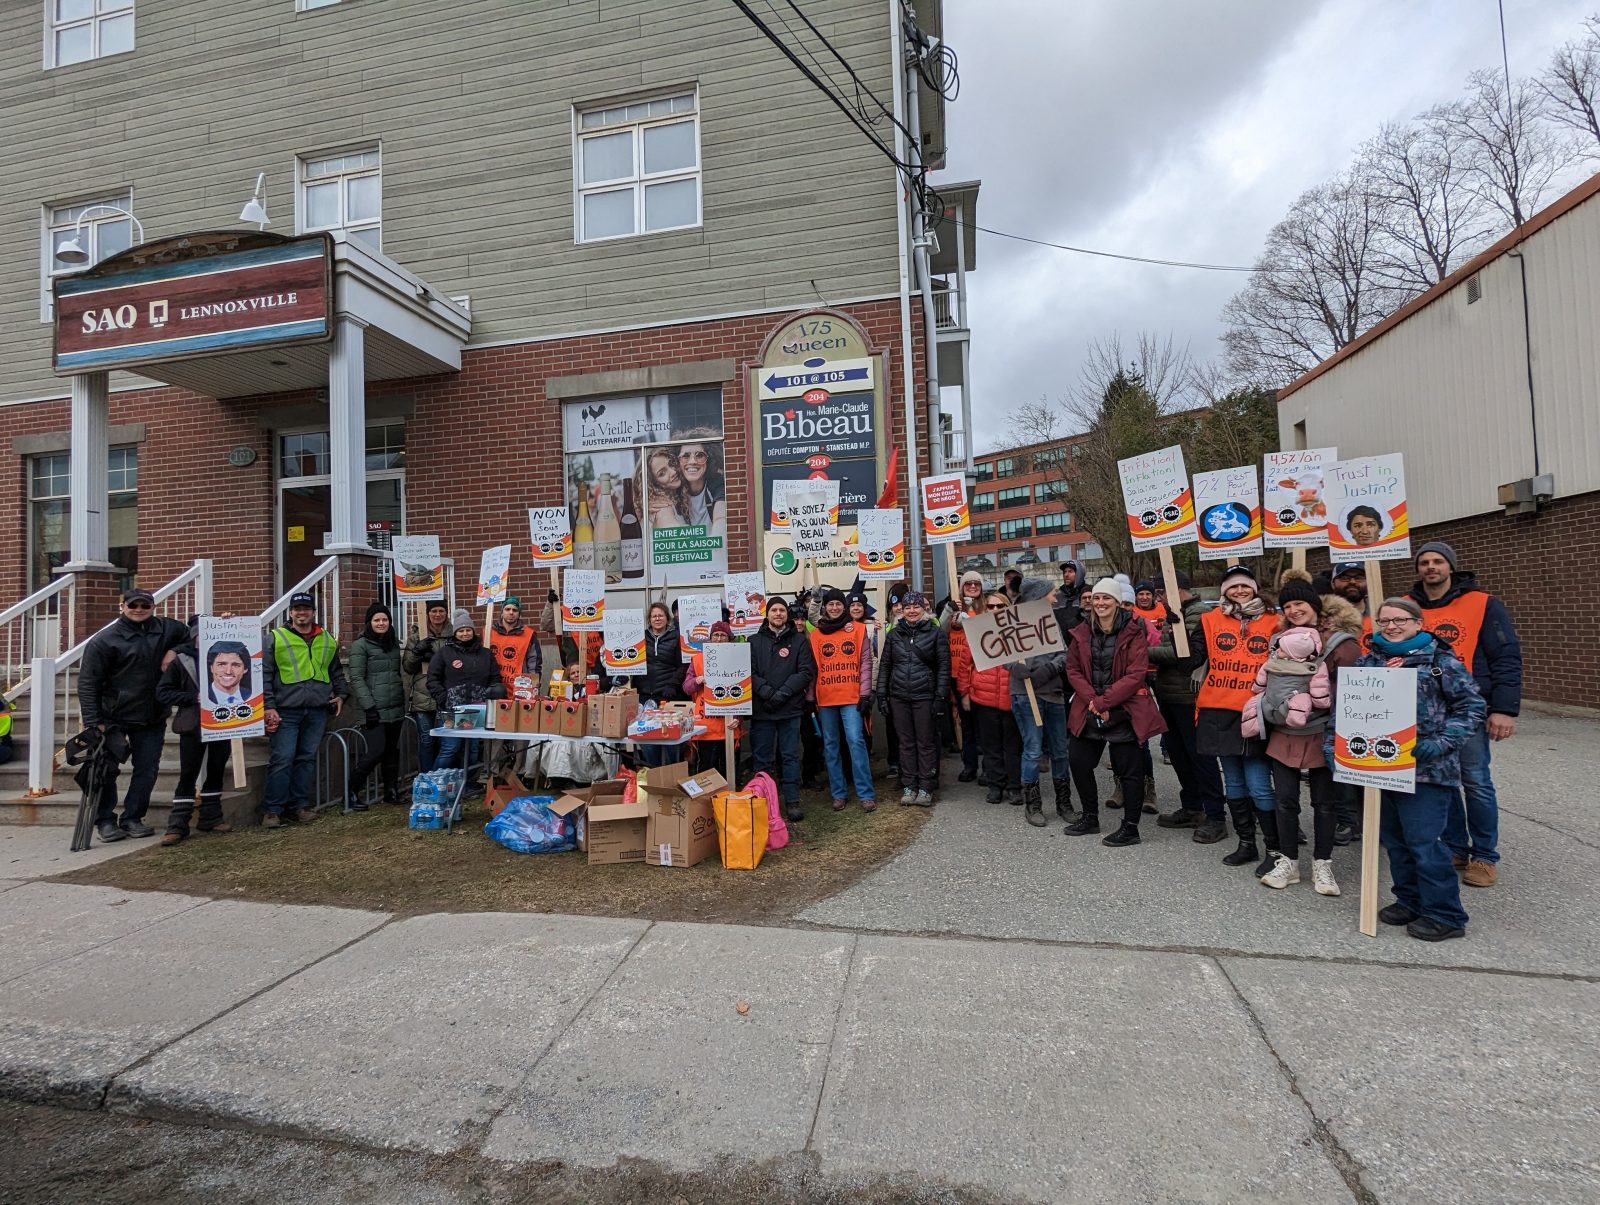 Federal public servants demonstrate in Lennoxville